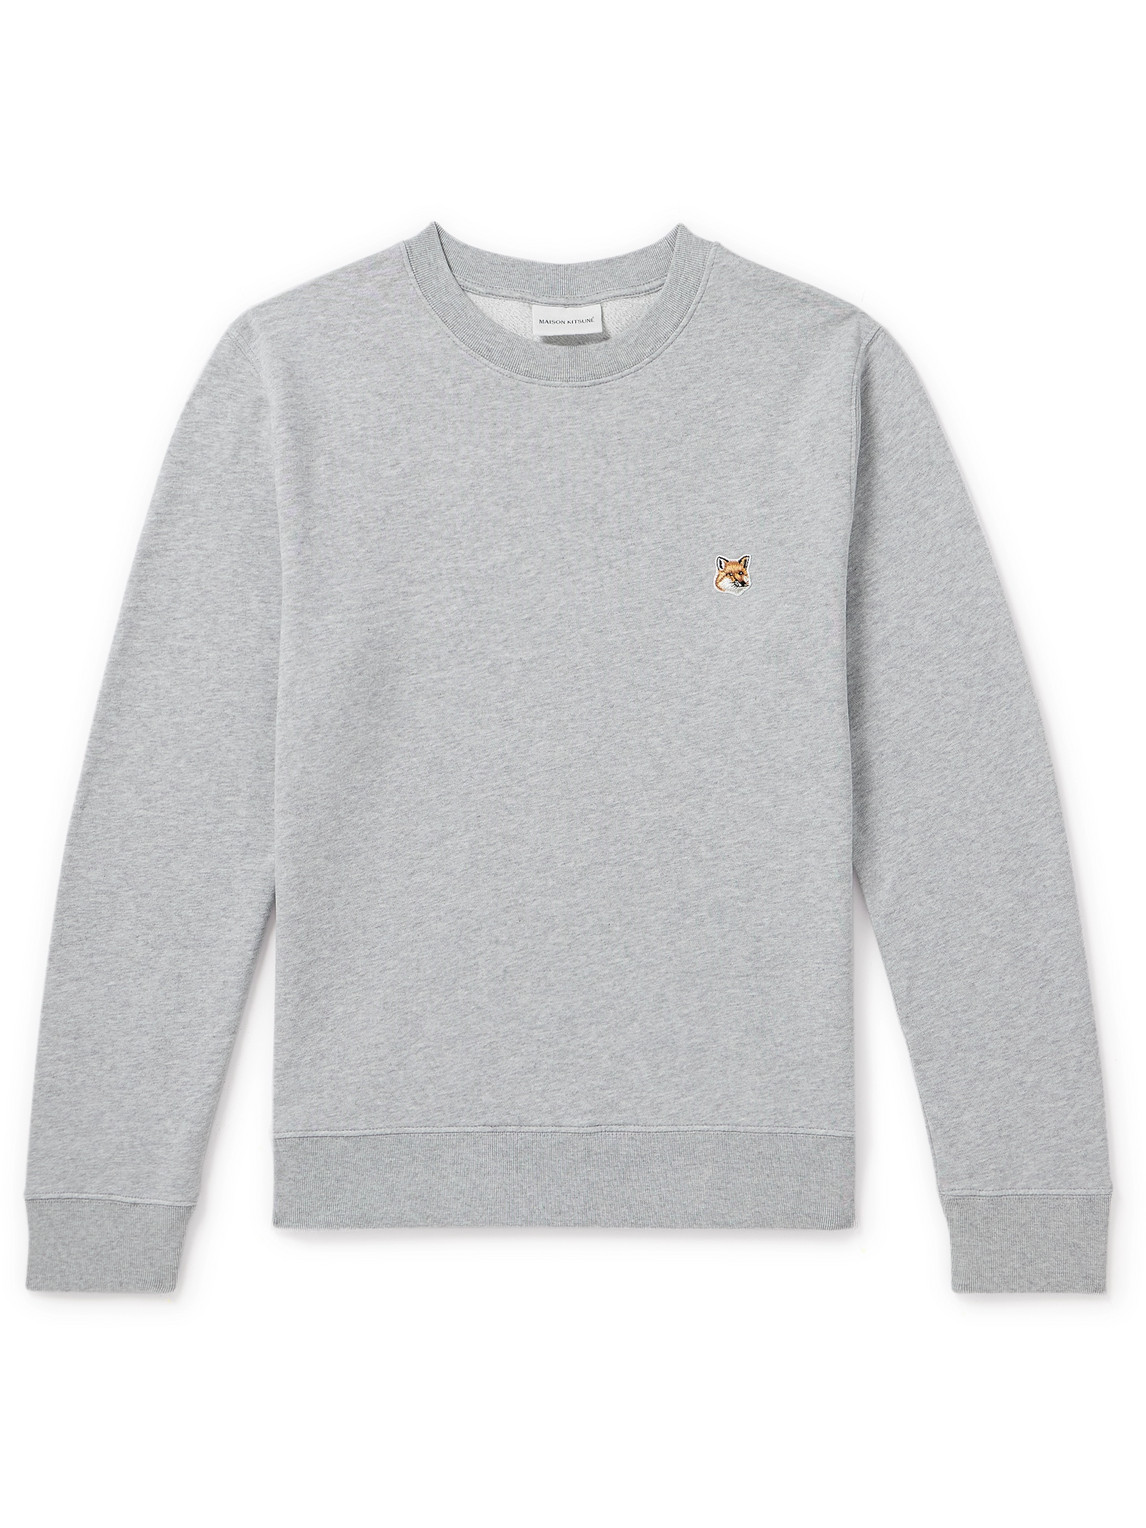 Maison Kitsuné - Logo-Appliquéd Cotton-Jersey Sweatshirt - Men - Gray - M von Maison Kitsuné